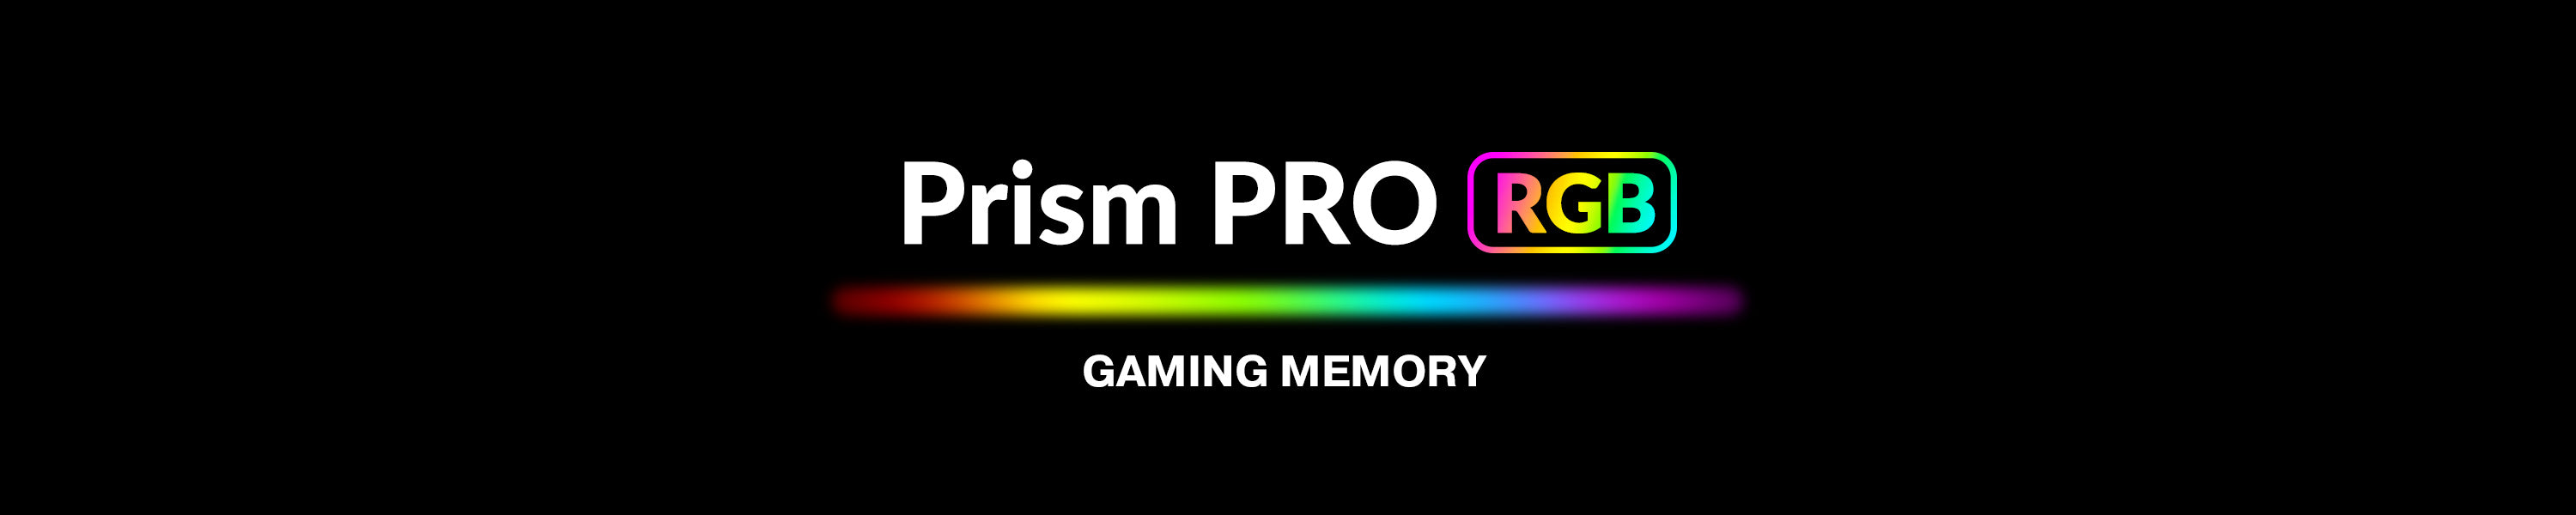 Prism Pro RGB Series